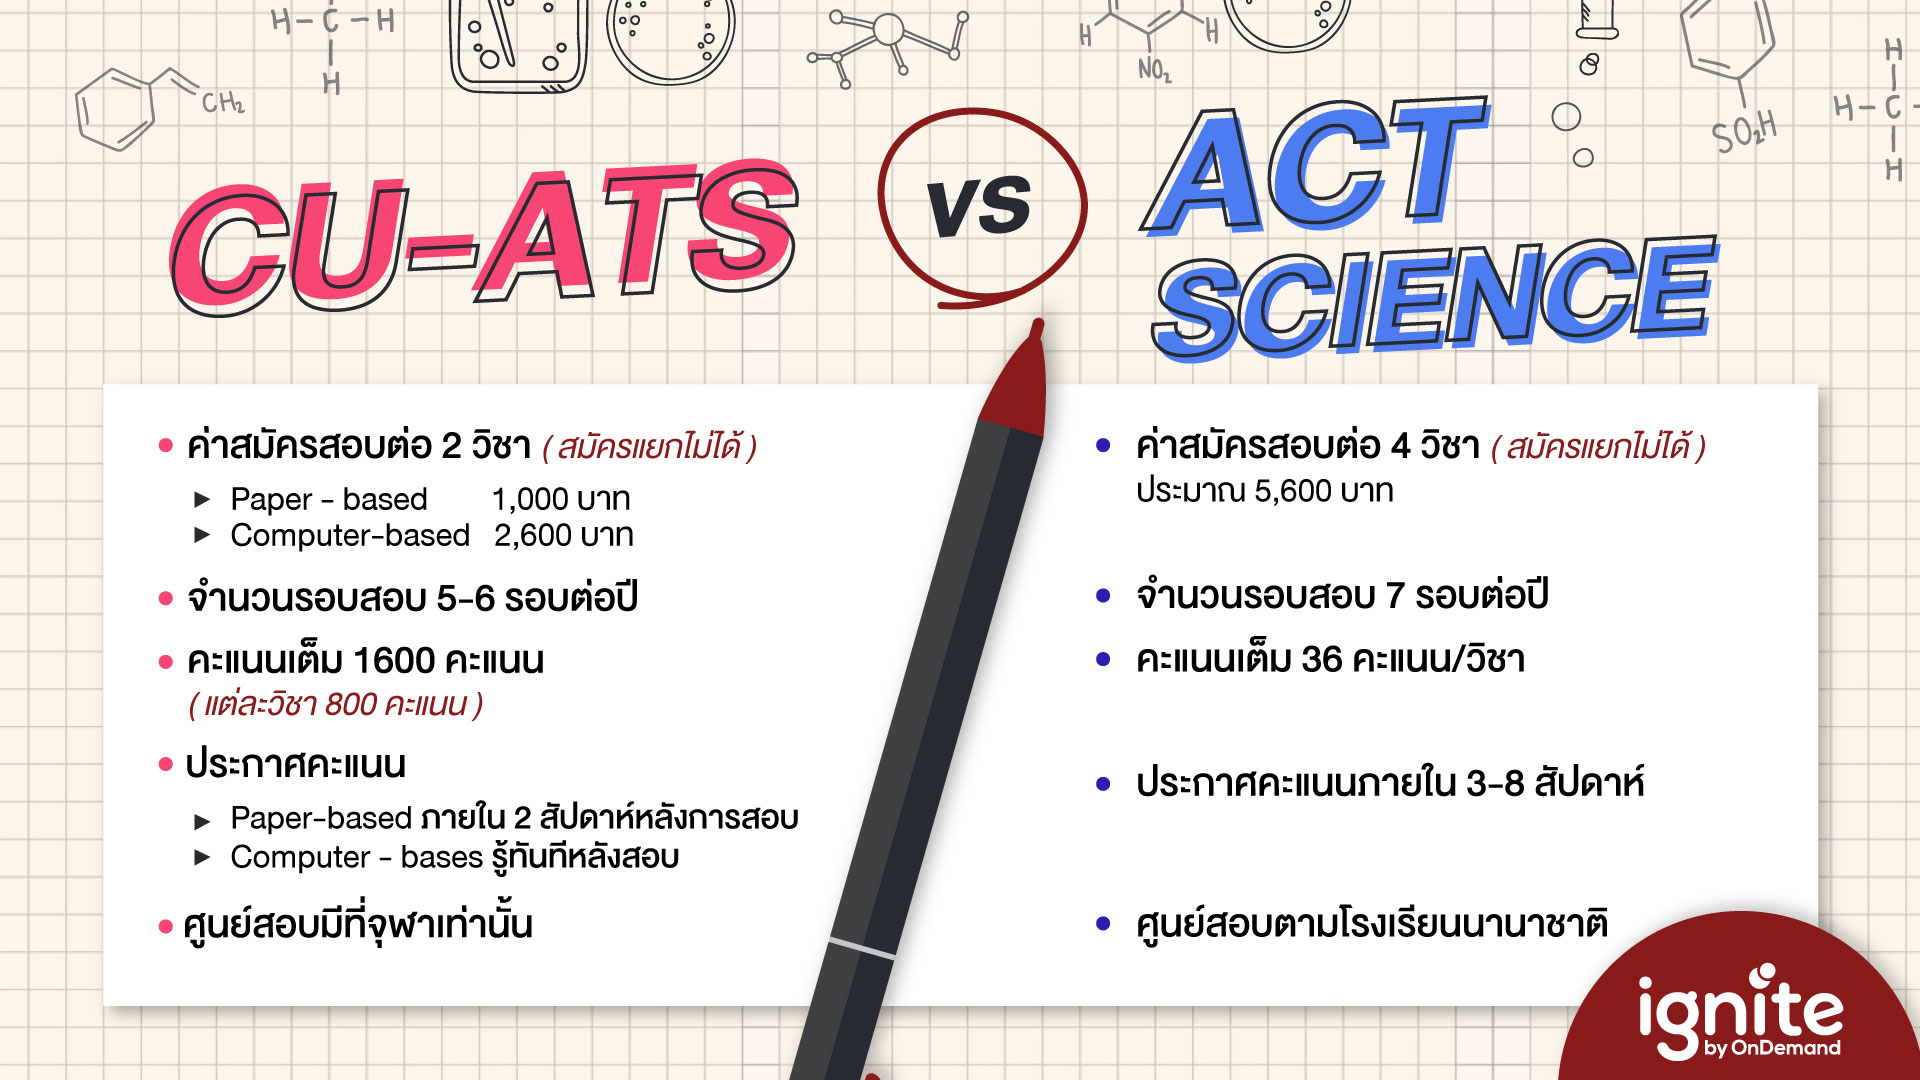 CU-ATS vs ACT SCIENCE - Bigcover2